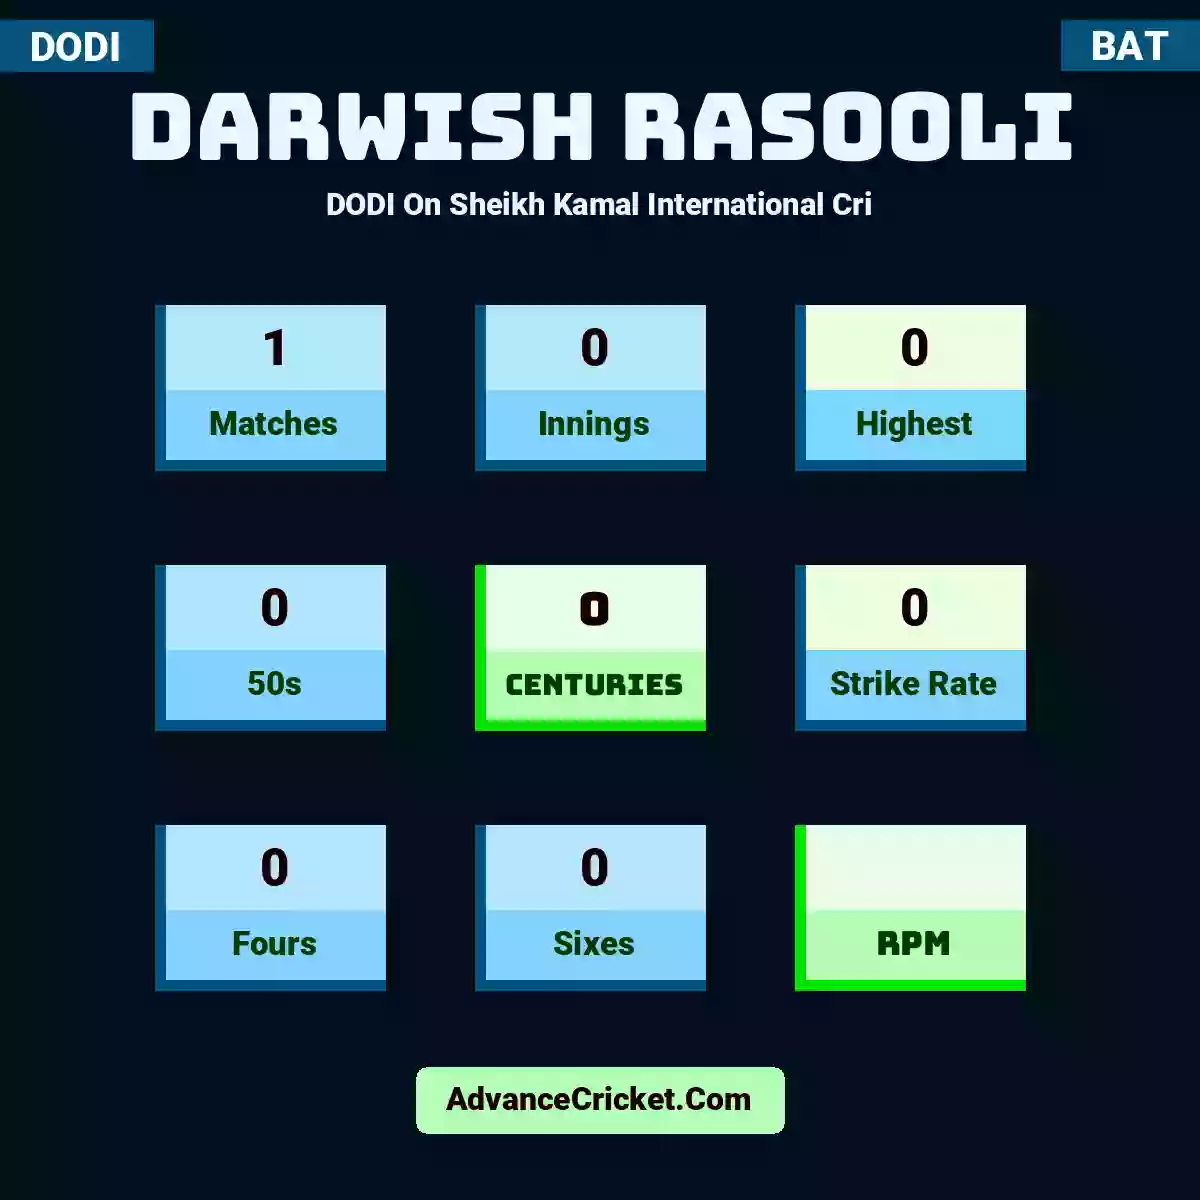 Darwish Rasooli DODI  On Sheikh Kamal International Cri, Darwish Rasooli played 1 matches, scored 0 runs as highest, 0 half-centuries, and 0 centuries, with a strike rate of 0. D.Rasooli hit 0 fours and 0 sixes.